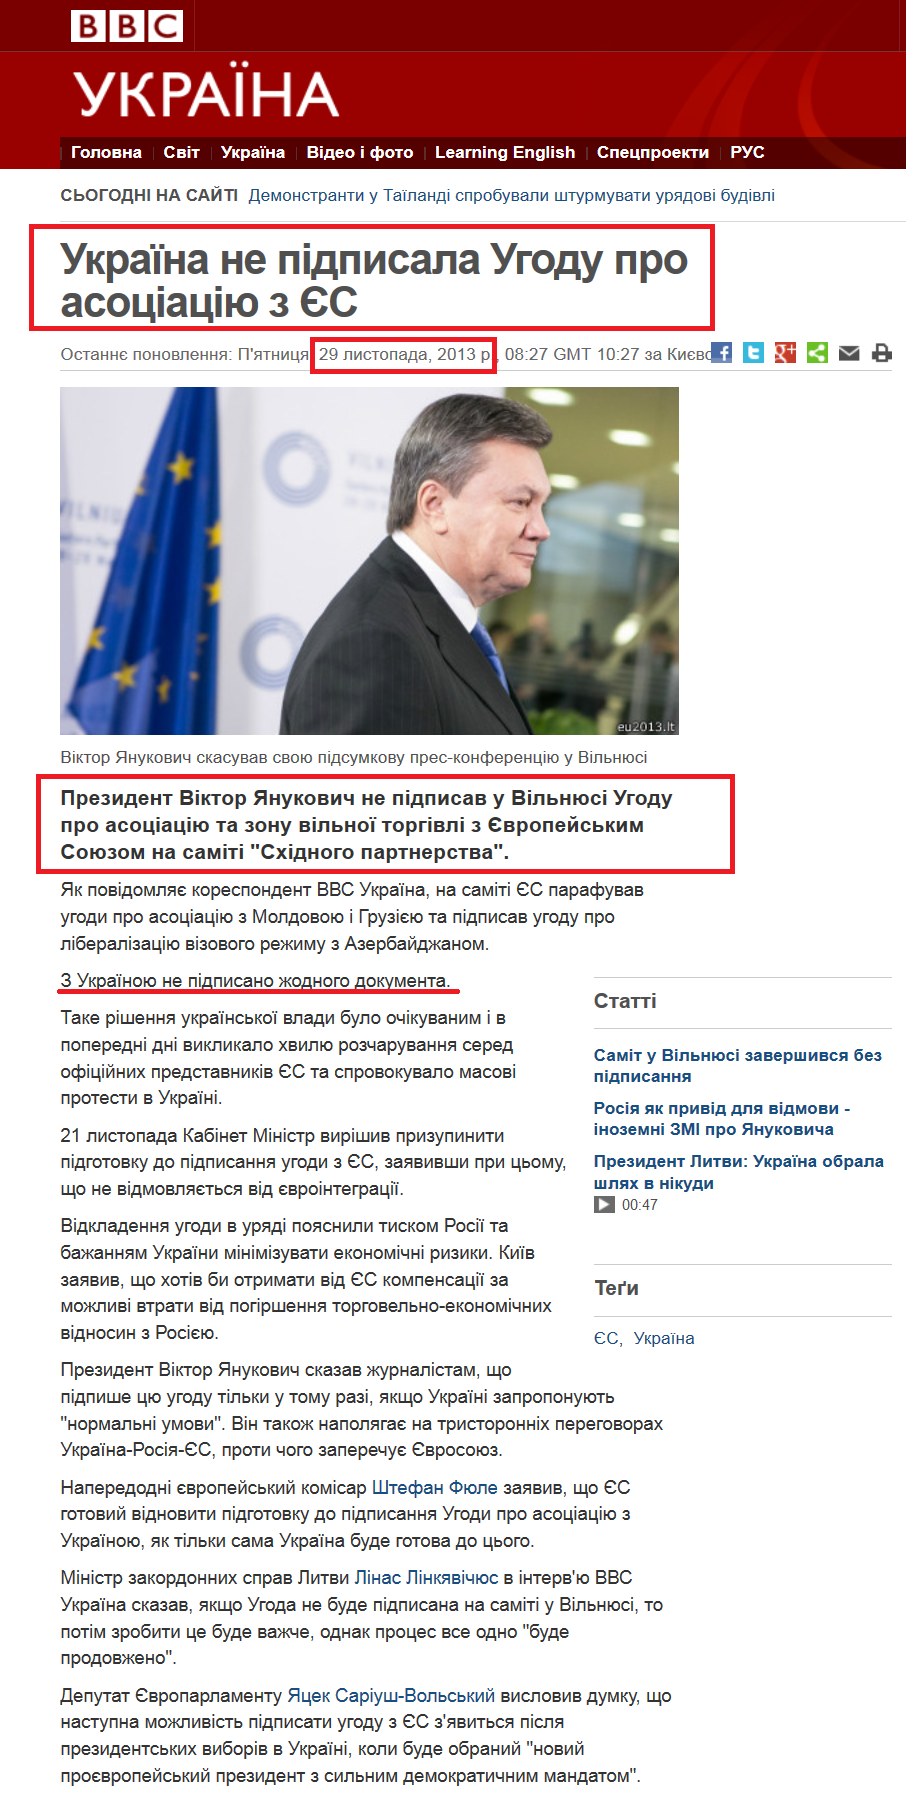 http://www.bbc.co.uk/ukrainian/politics/2013/11/131129_ukraine_eu_assignment_ek.shtml